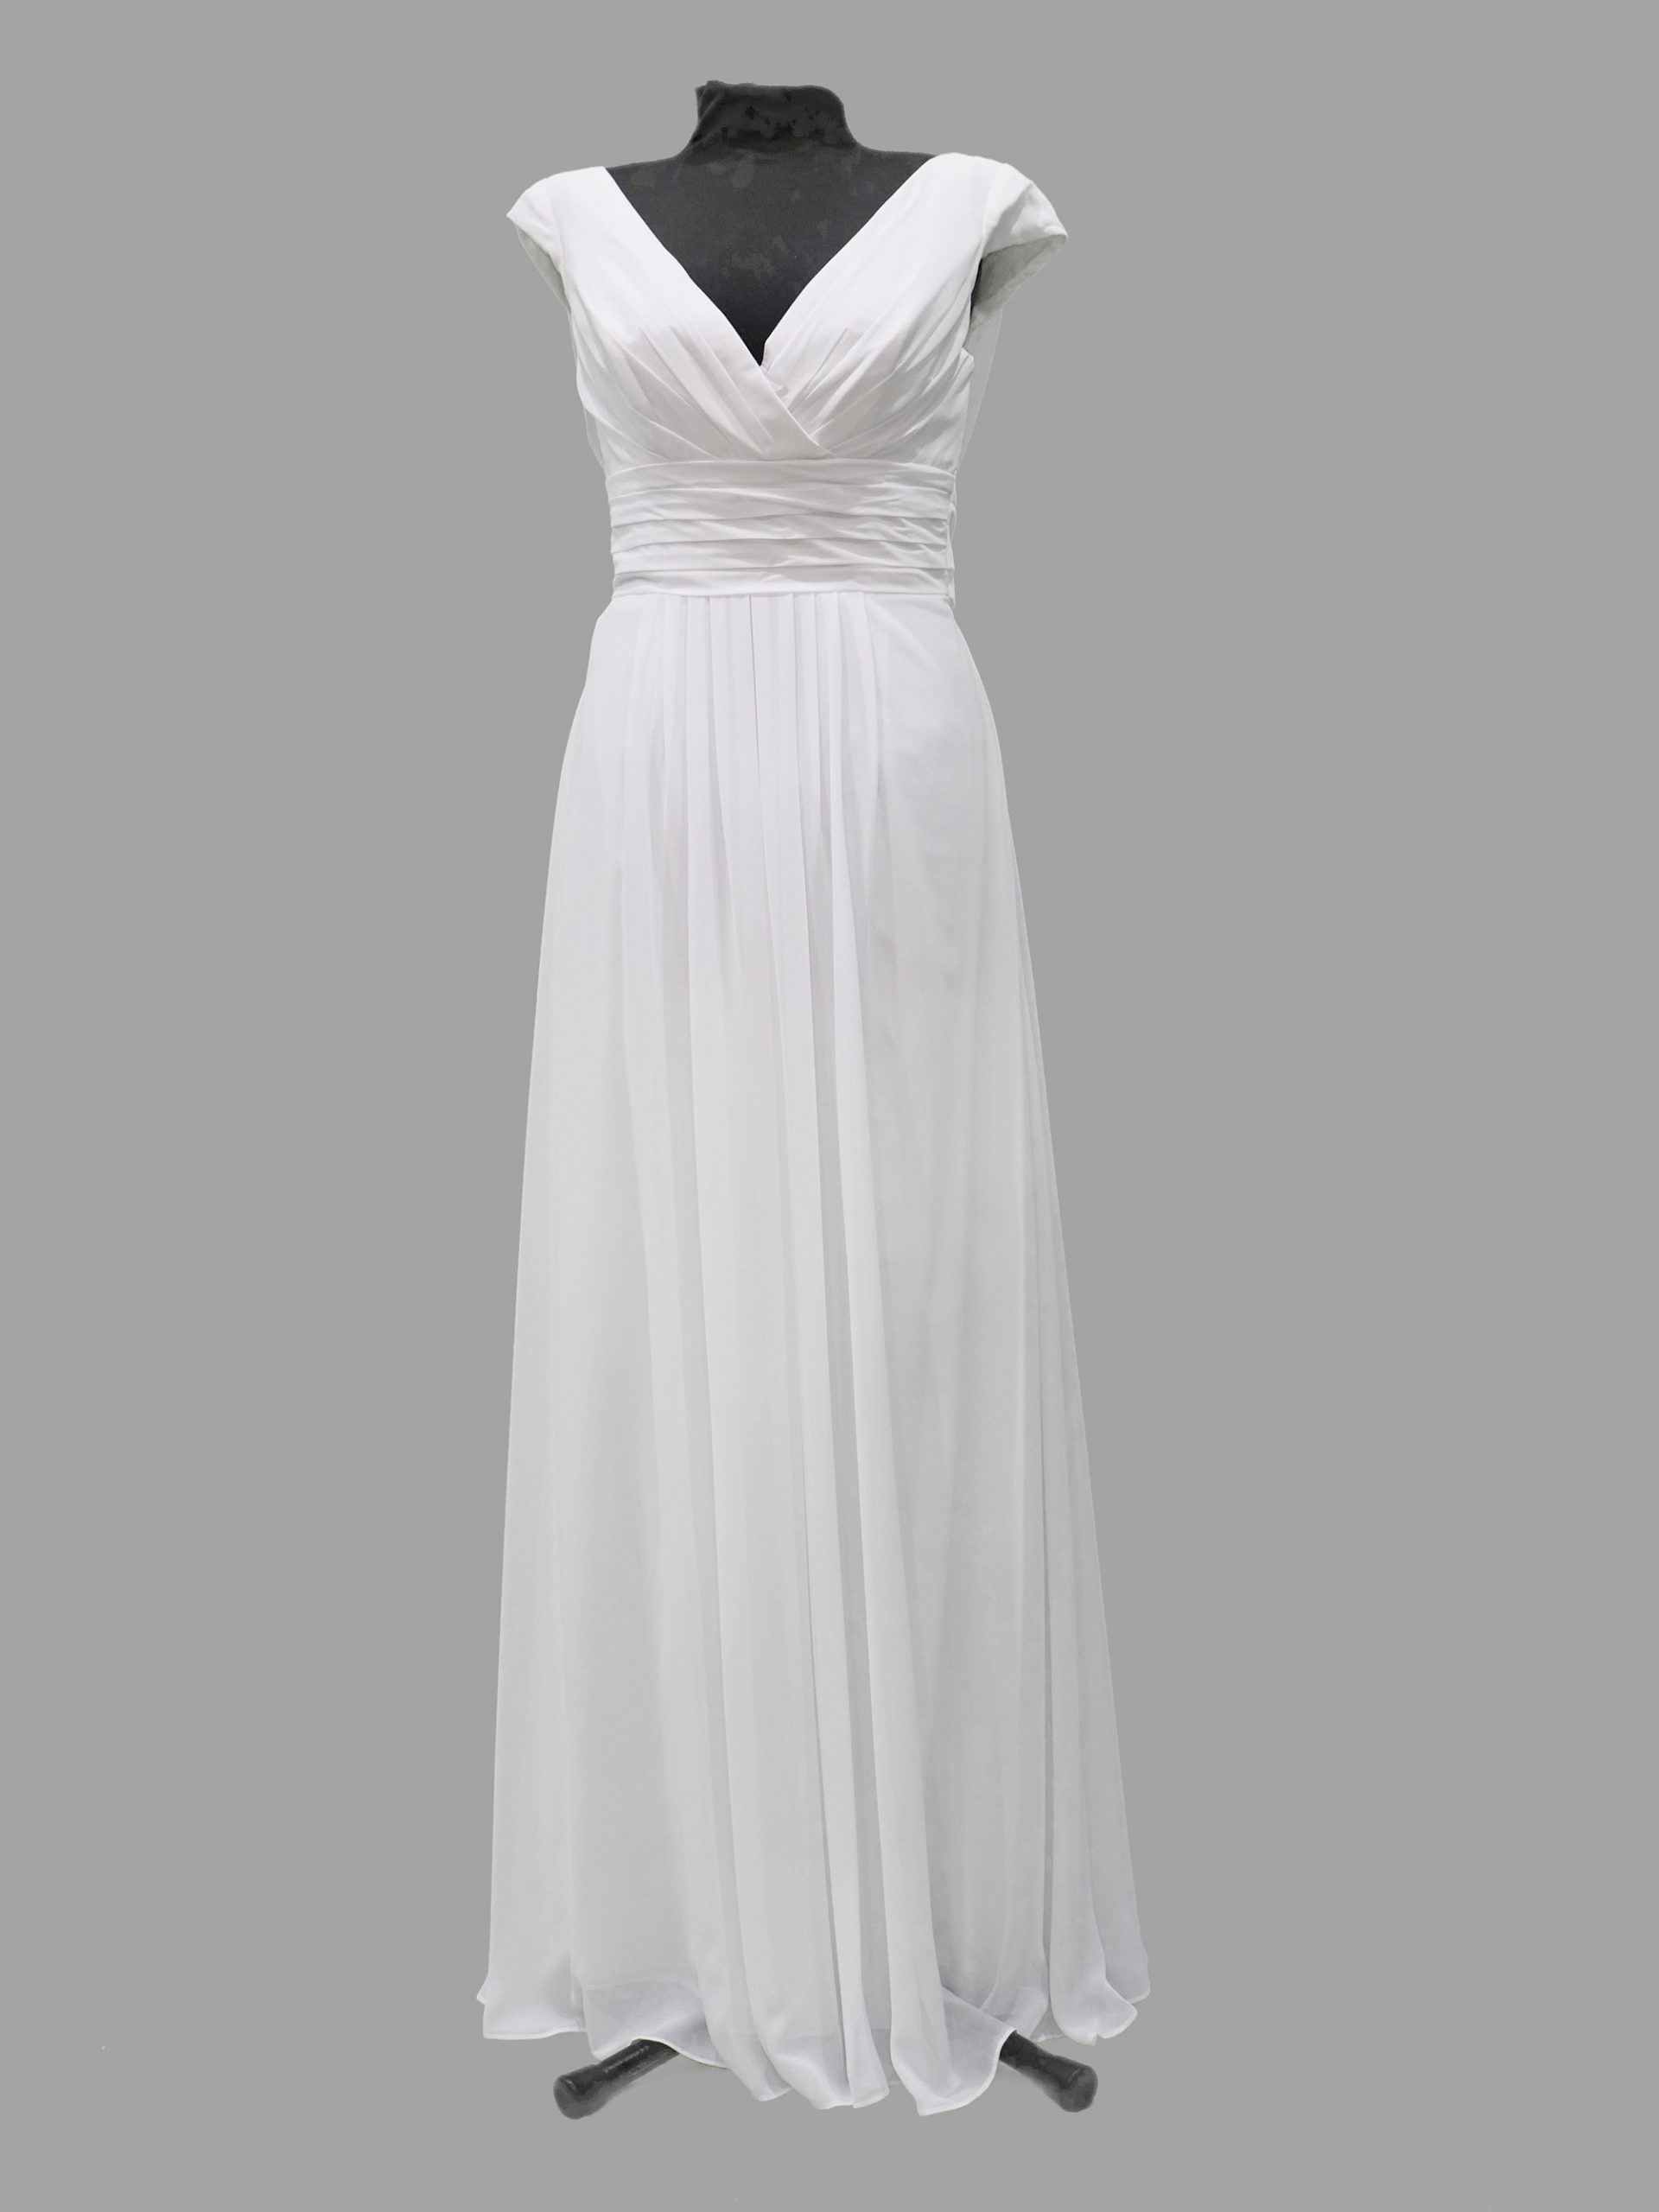 Simple wedding/debutante dress, white chiffon, Crux CB233, small size12